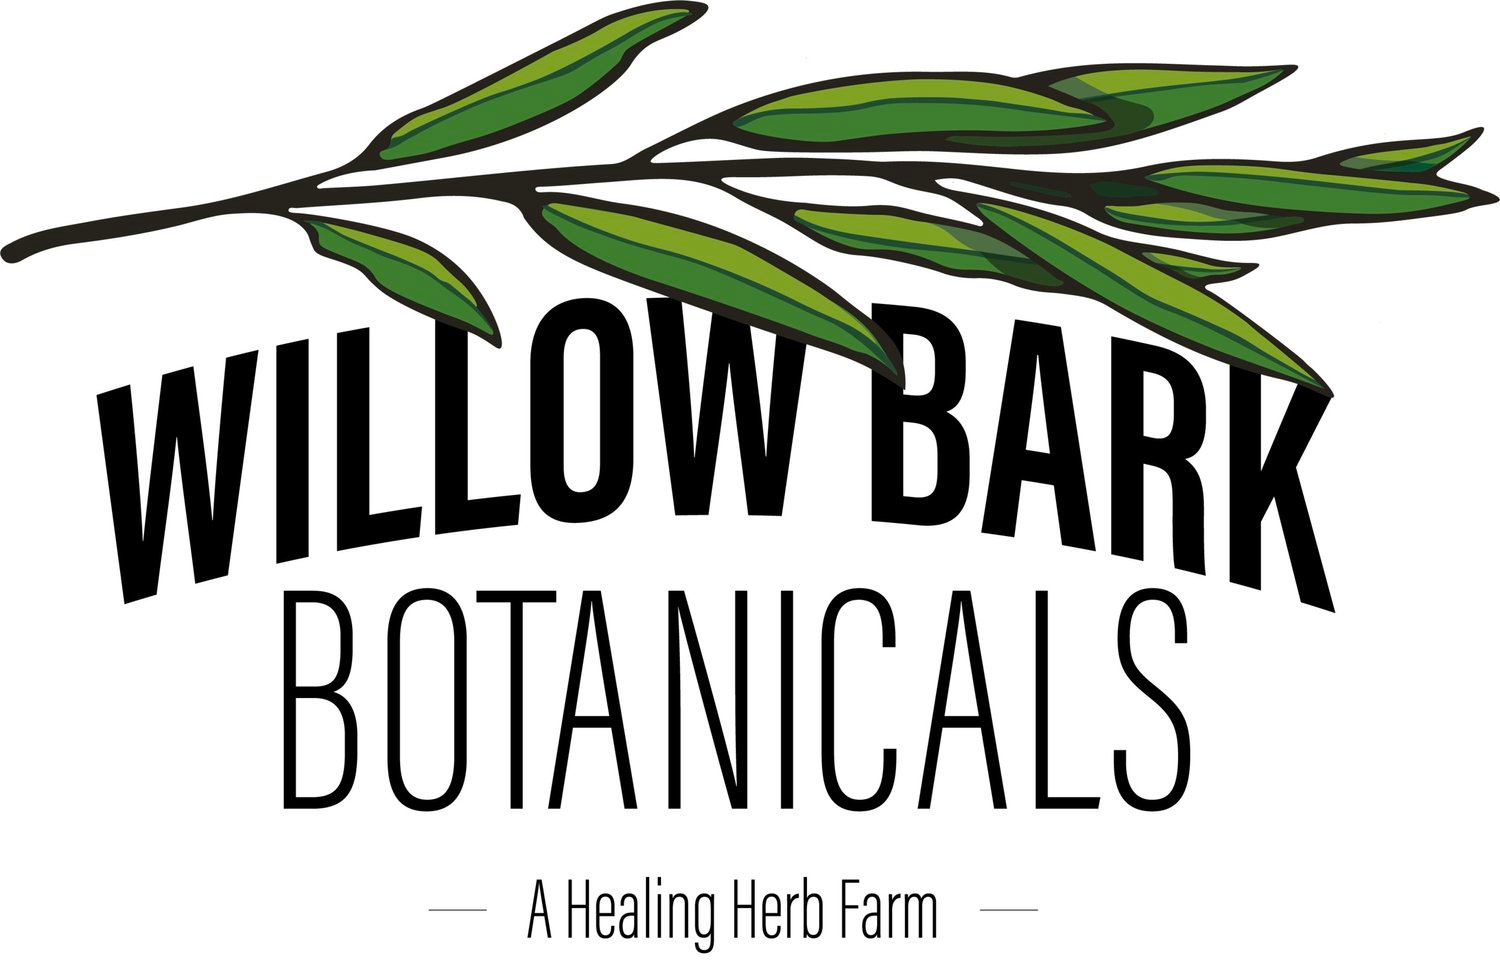 Willowbark Botanicals